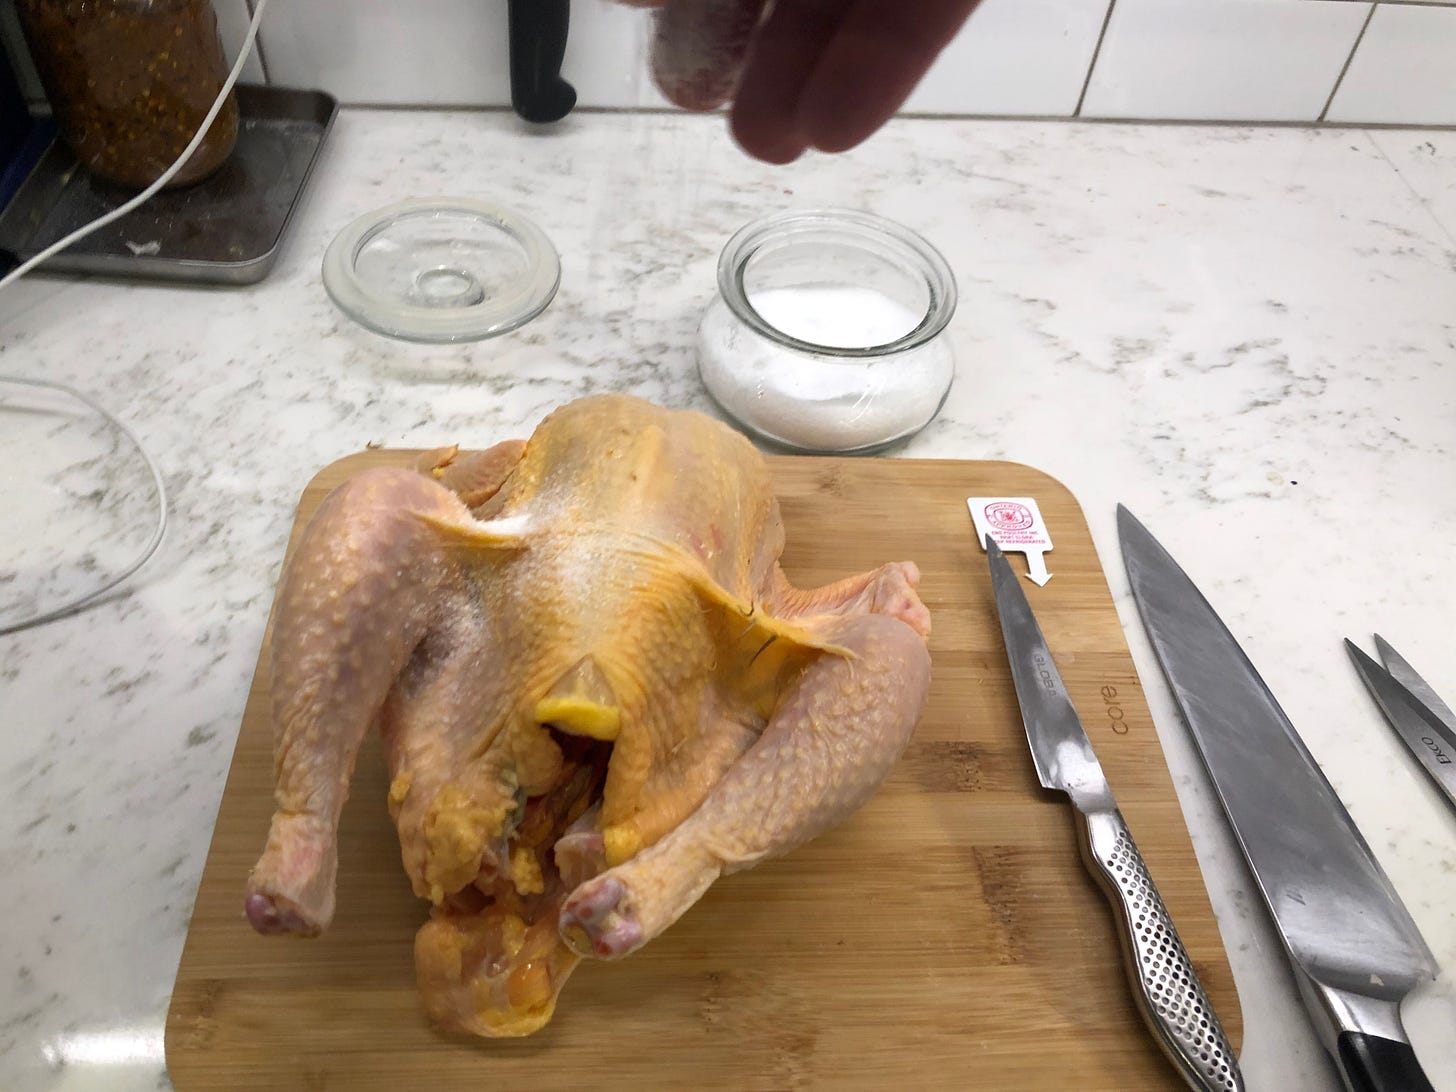 A hand sprinkling salt onto the chicken.